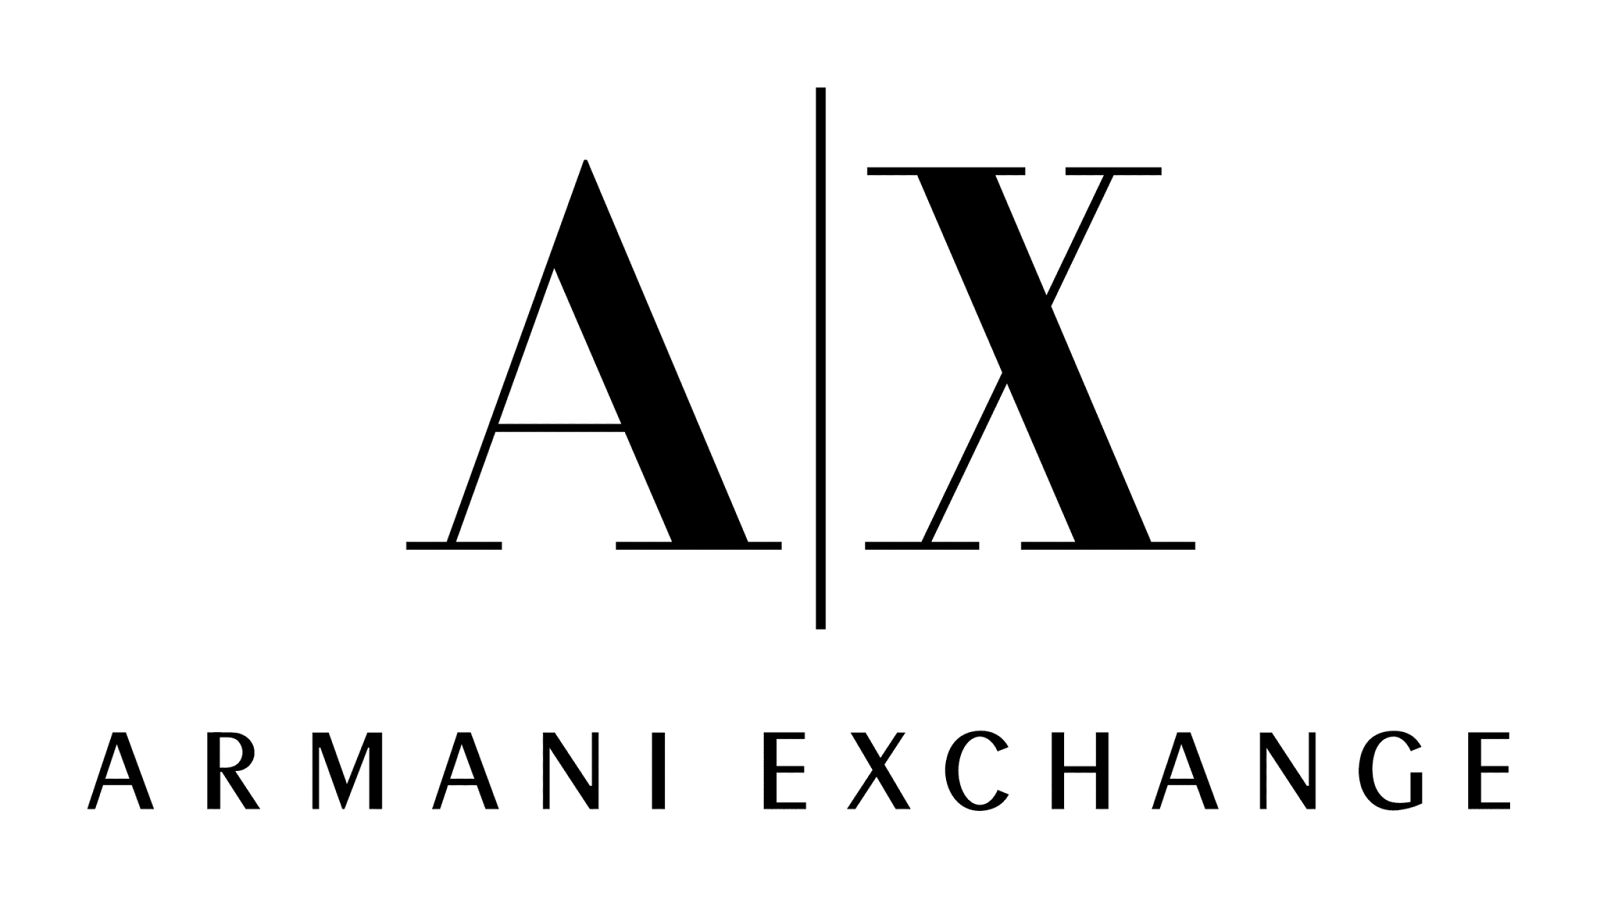 The logo for Armani Exchange